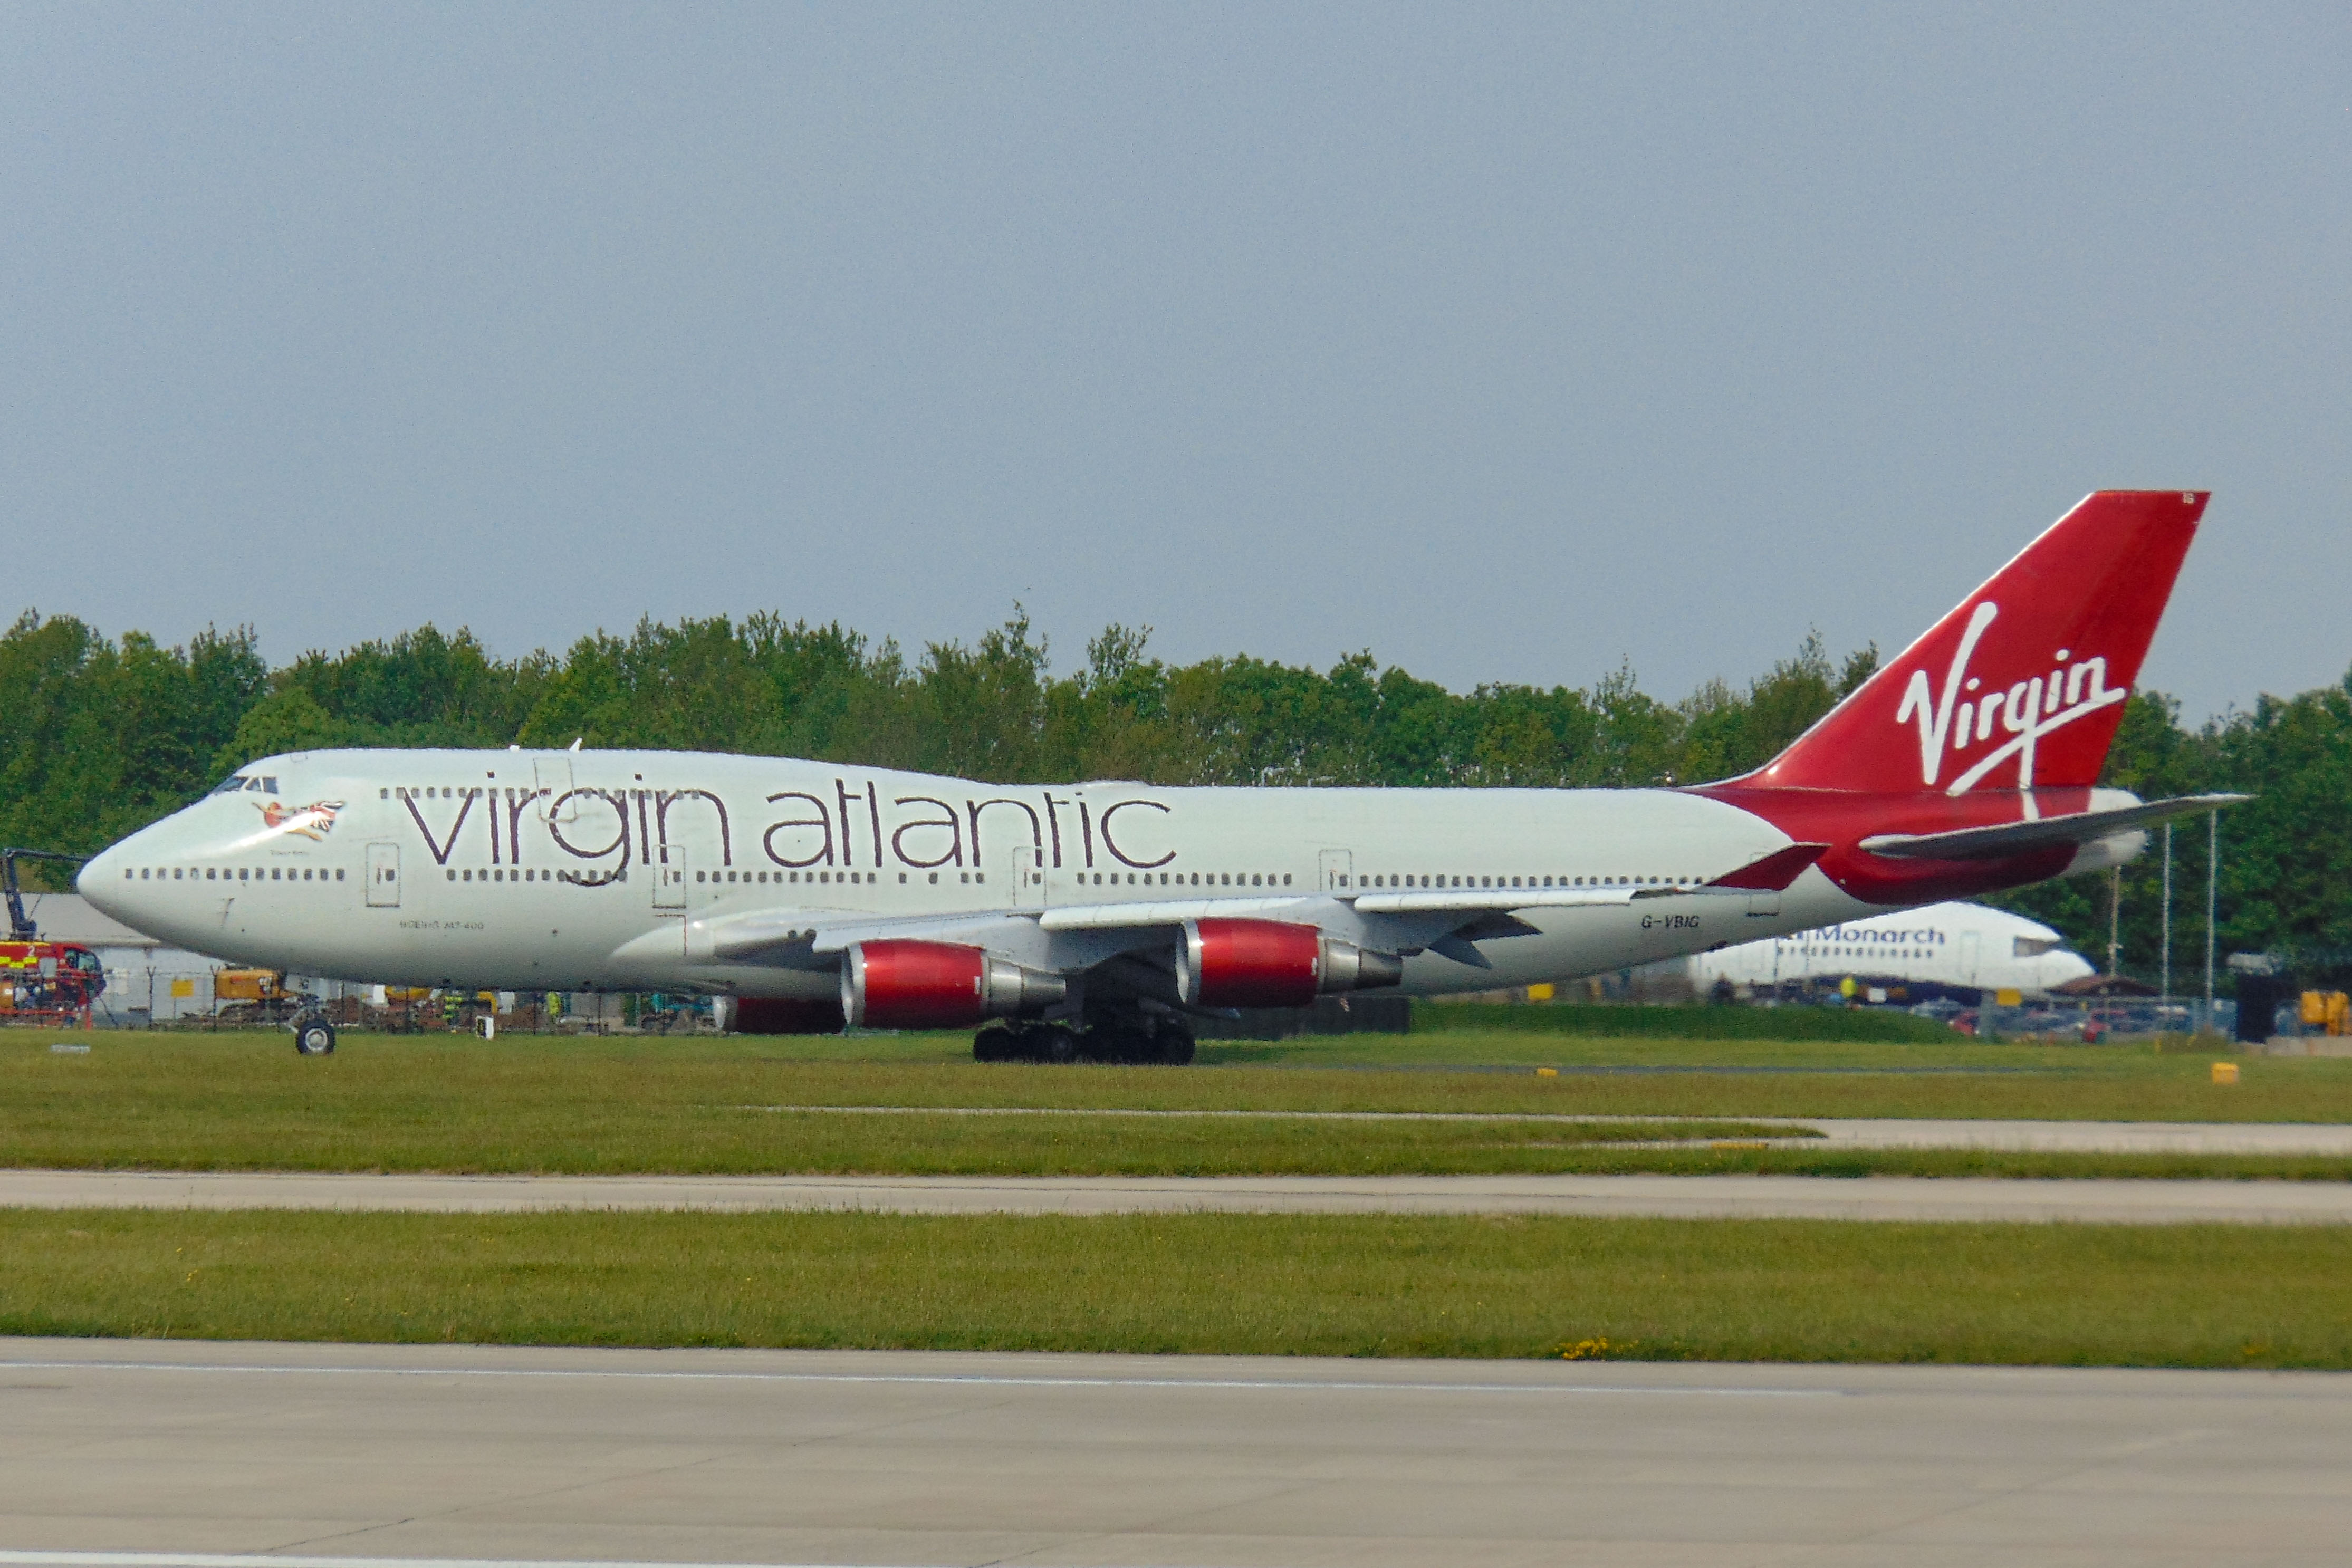 G-VBIG/GVBIG Lessor Boeing 747 Airframe Information - AVSpotters.com